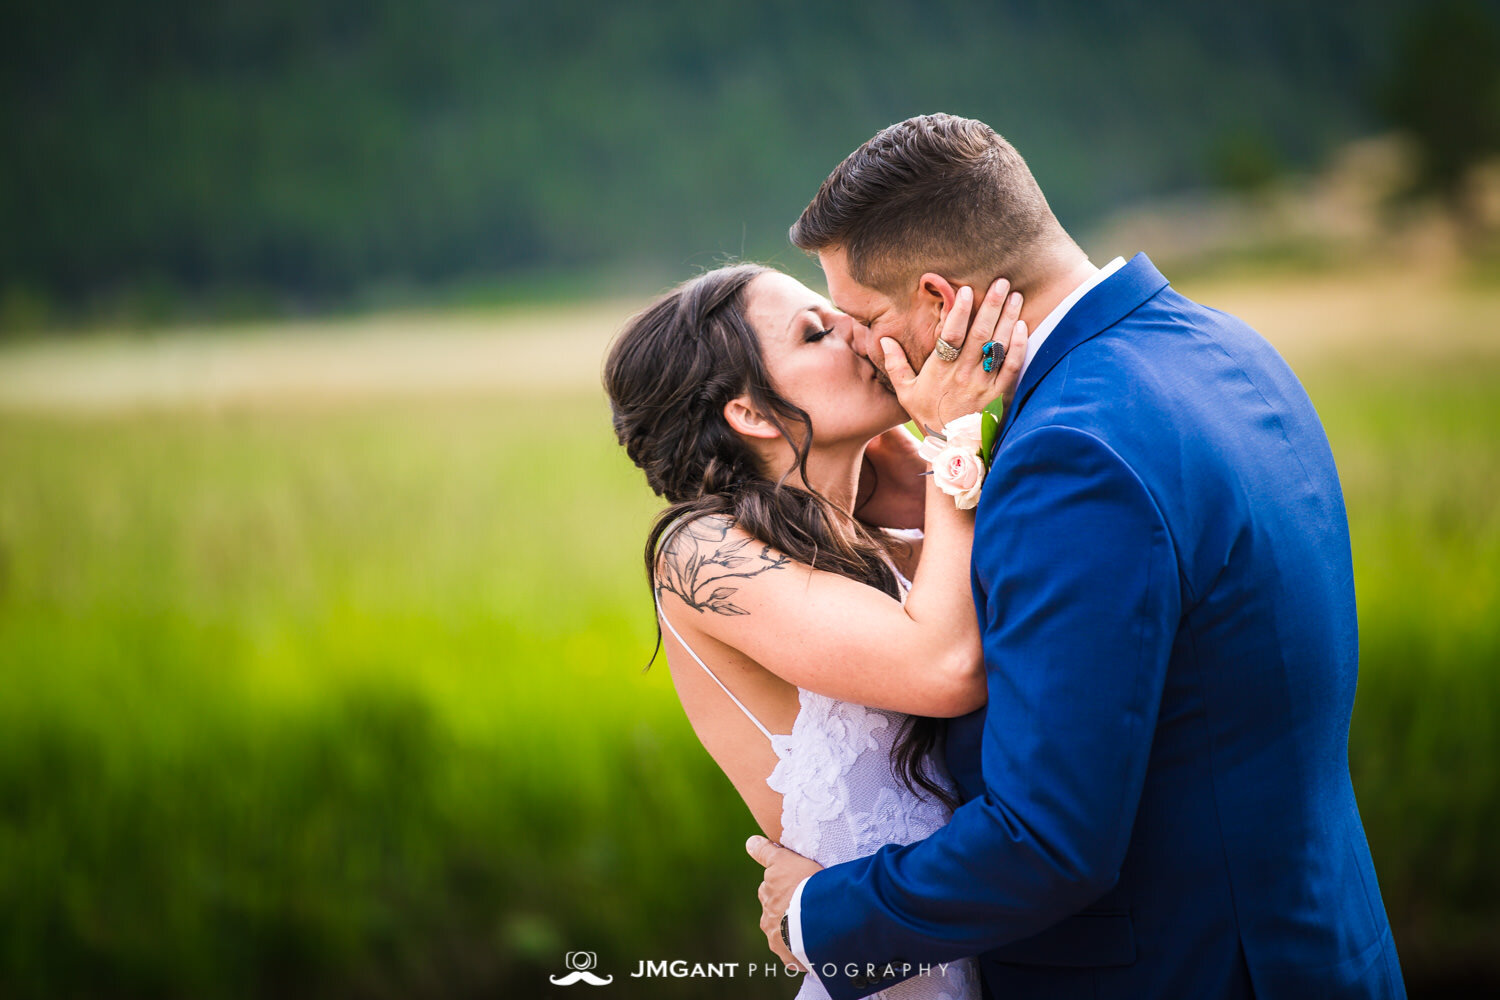  Summer elopement in
Rocky Mountain National Park
© JMGant Photography
http://www.jmgantphotography.com/ 